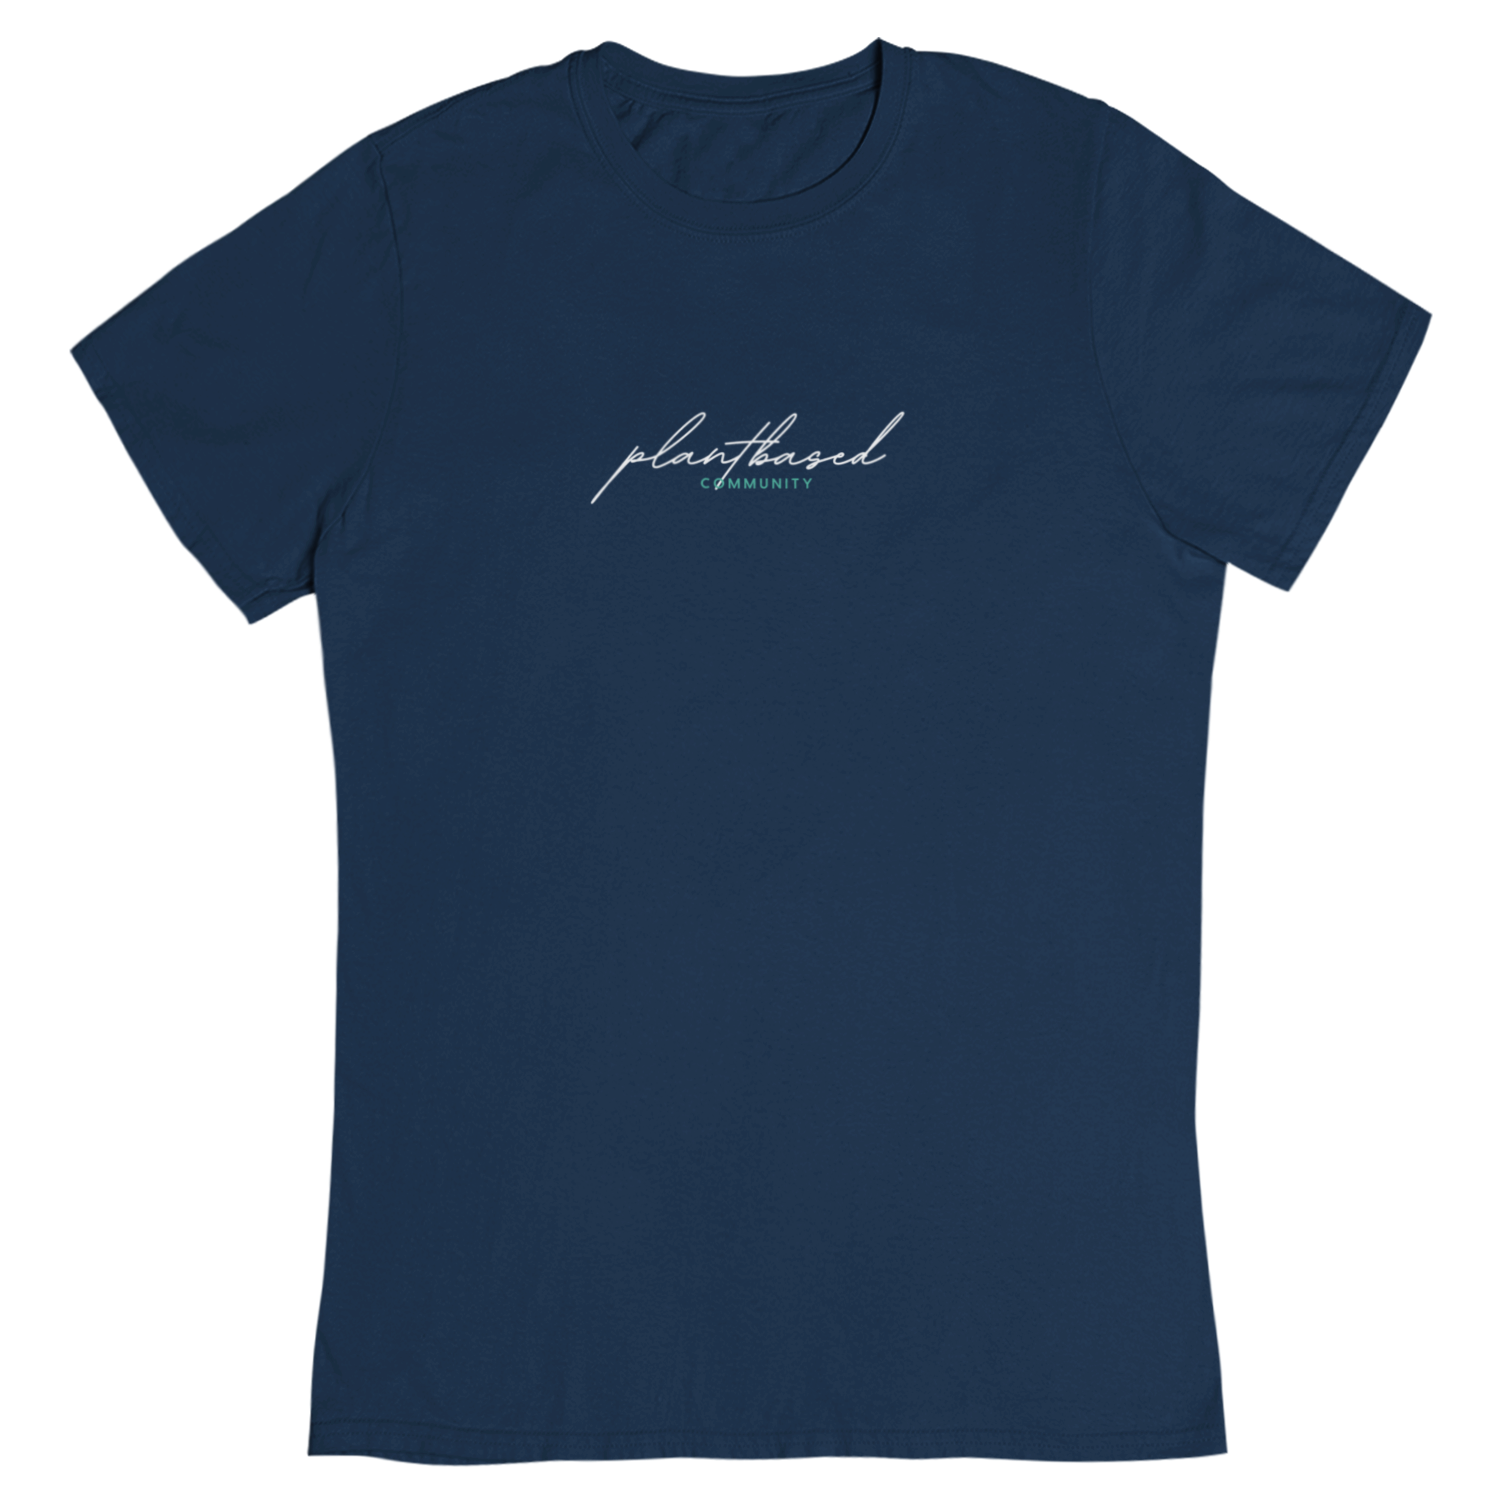 Plantbased Community - Damen T-Shirt